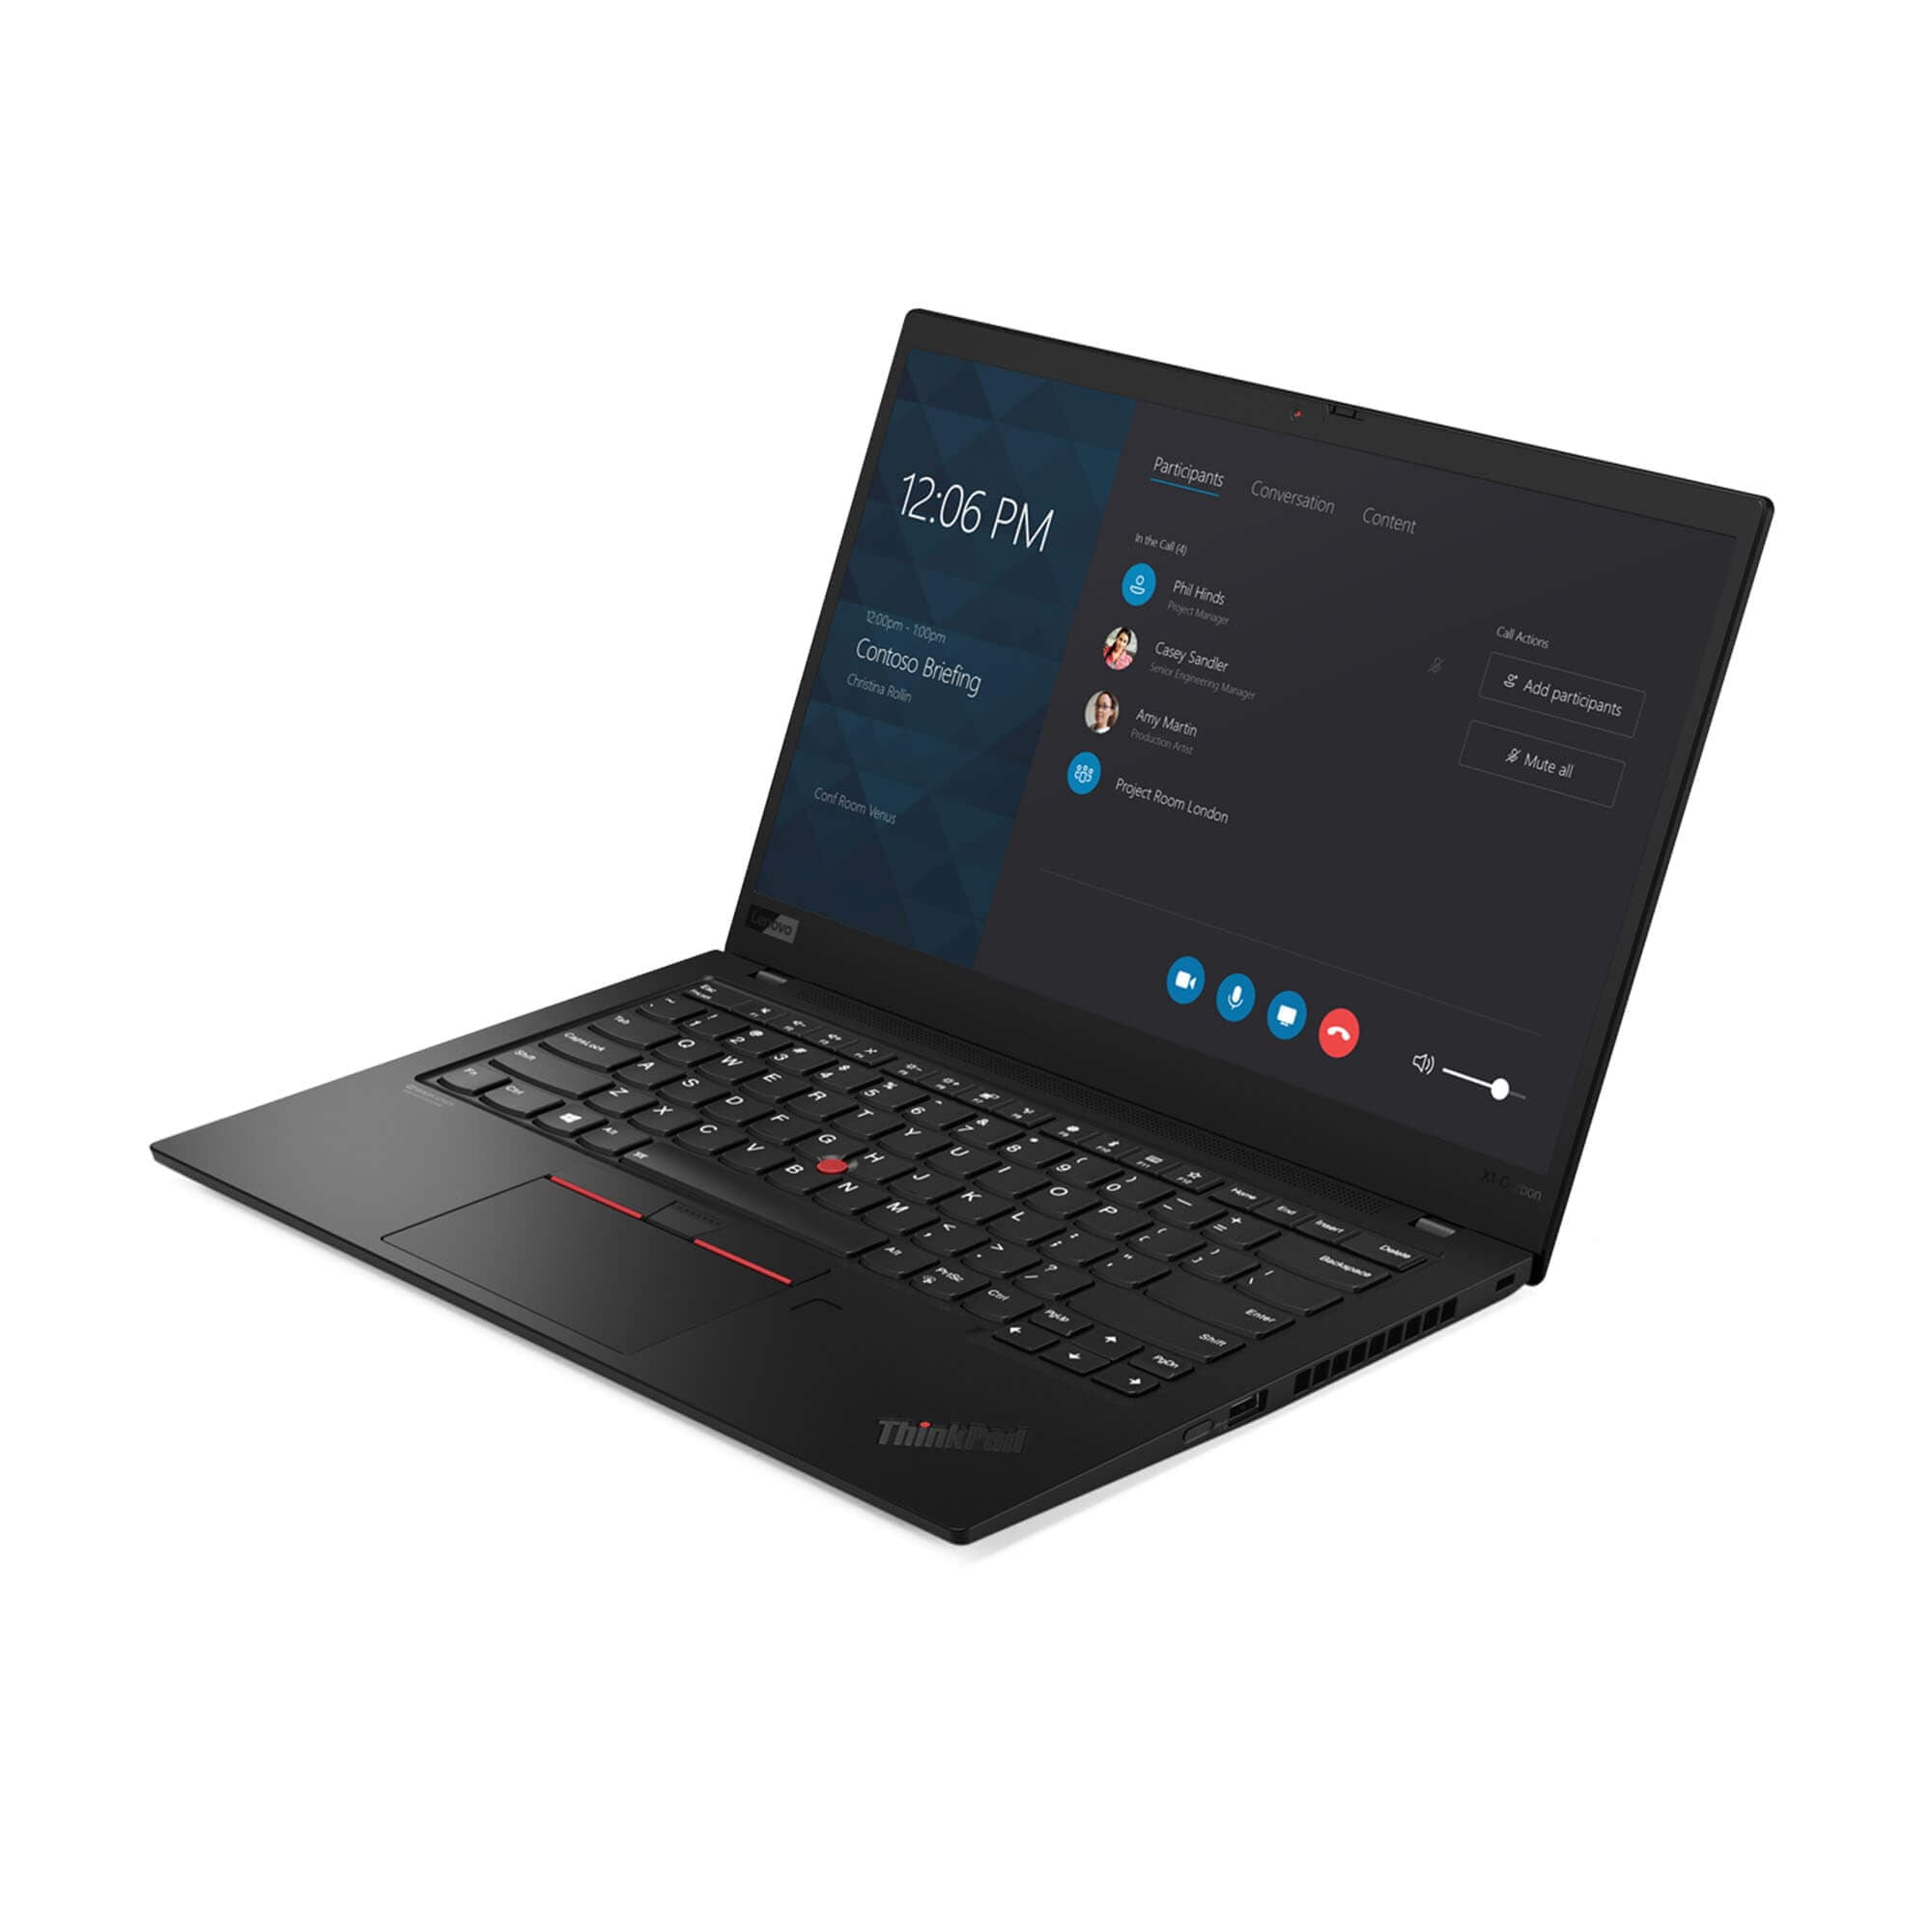 Lenovo ThinkPad X1 Carbon Gen 7 Laptop, 14.0